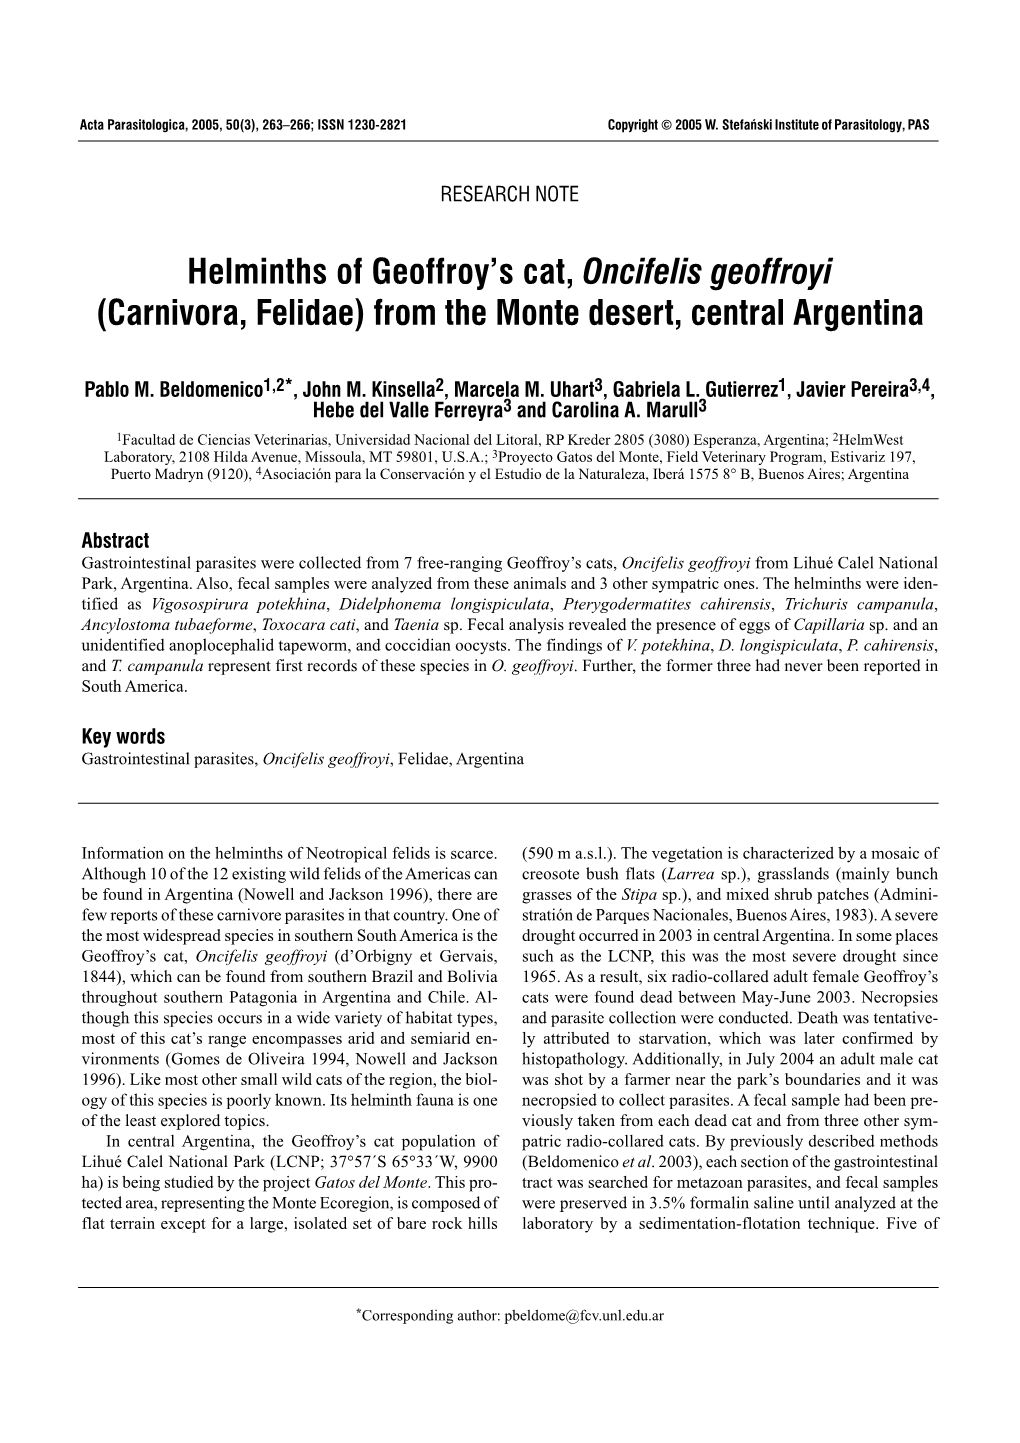 Helminths of Geoffroy's Cat, Oncifelis Geoffroyi (Carnivora, Felidae)